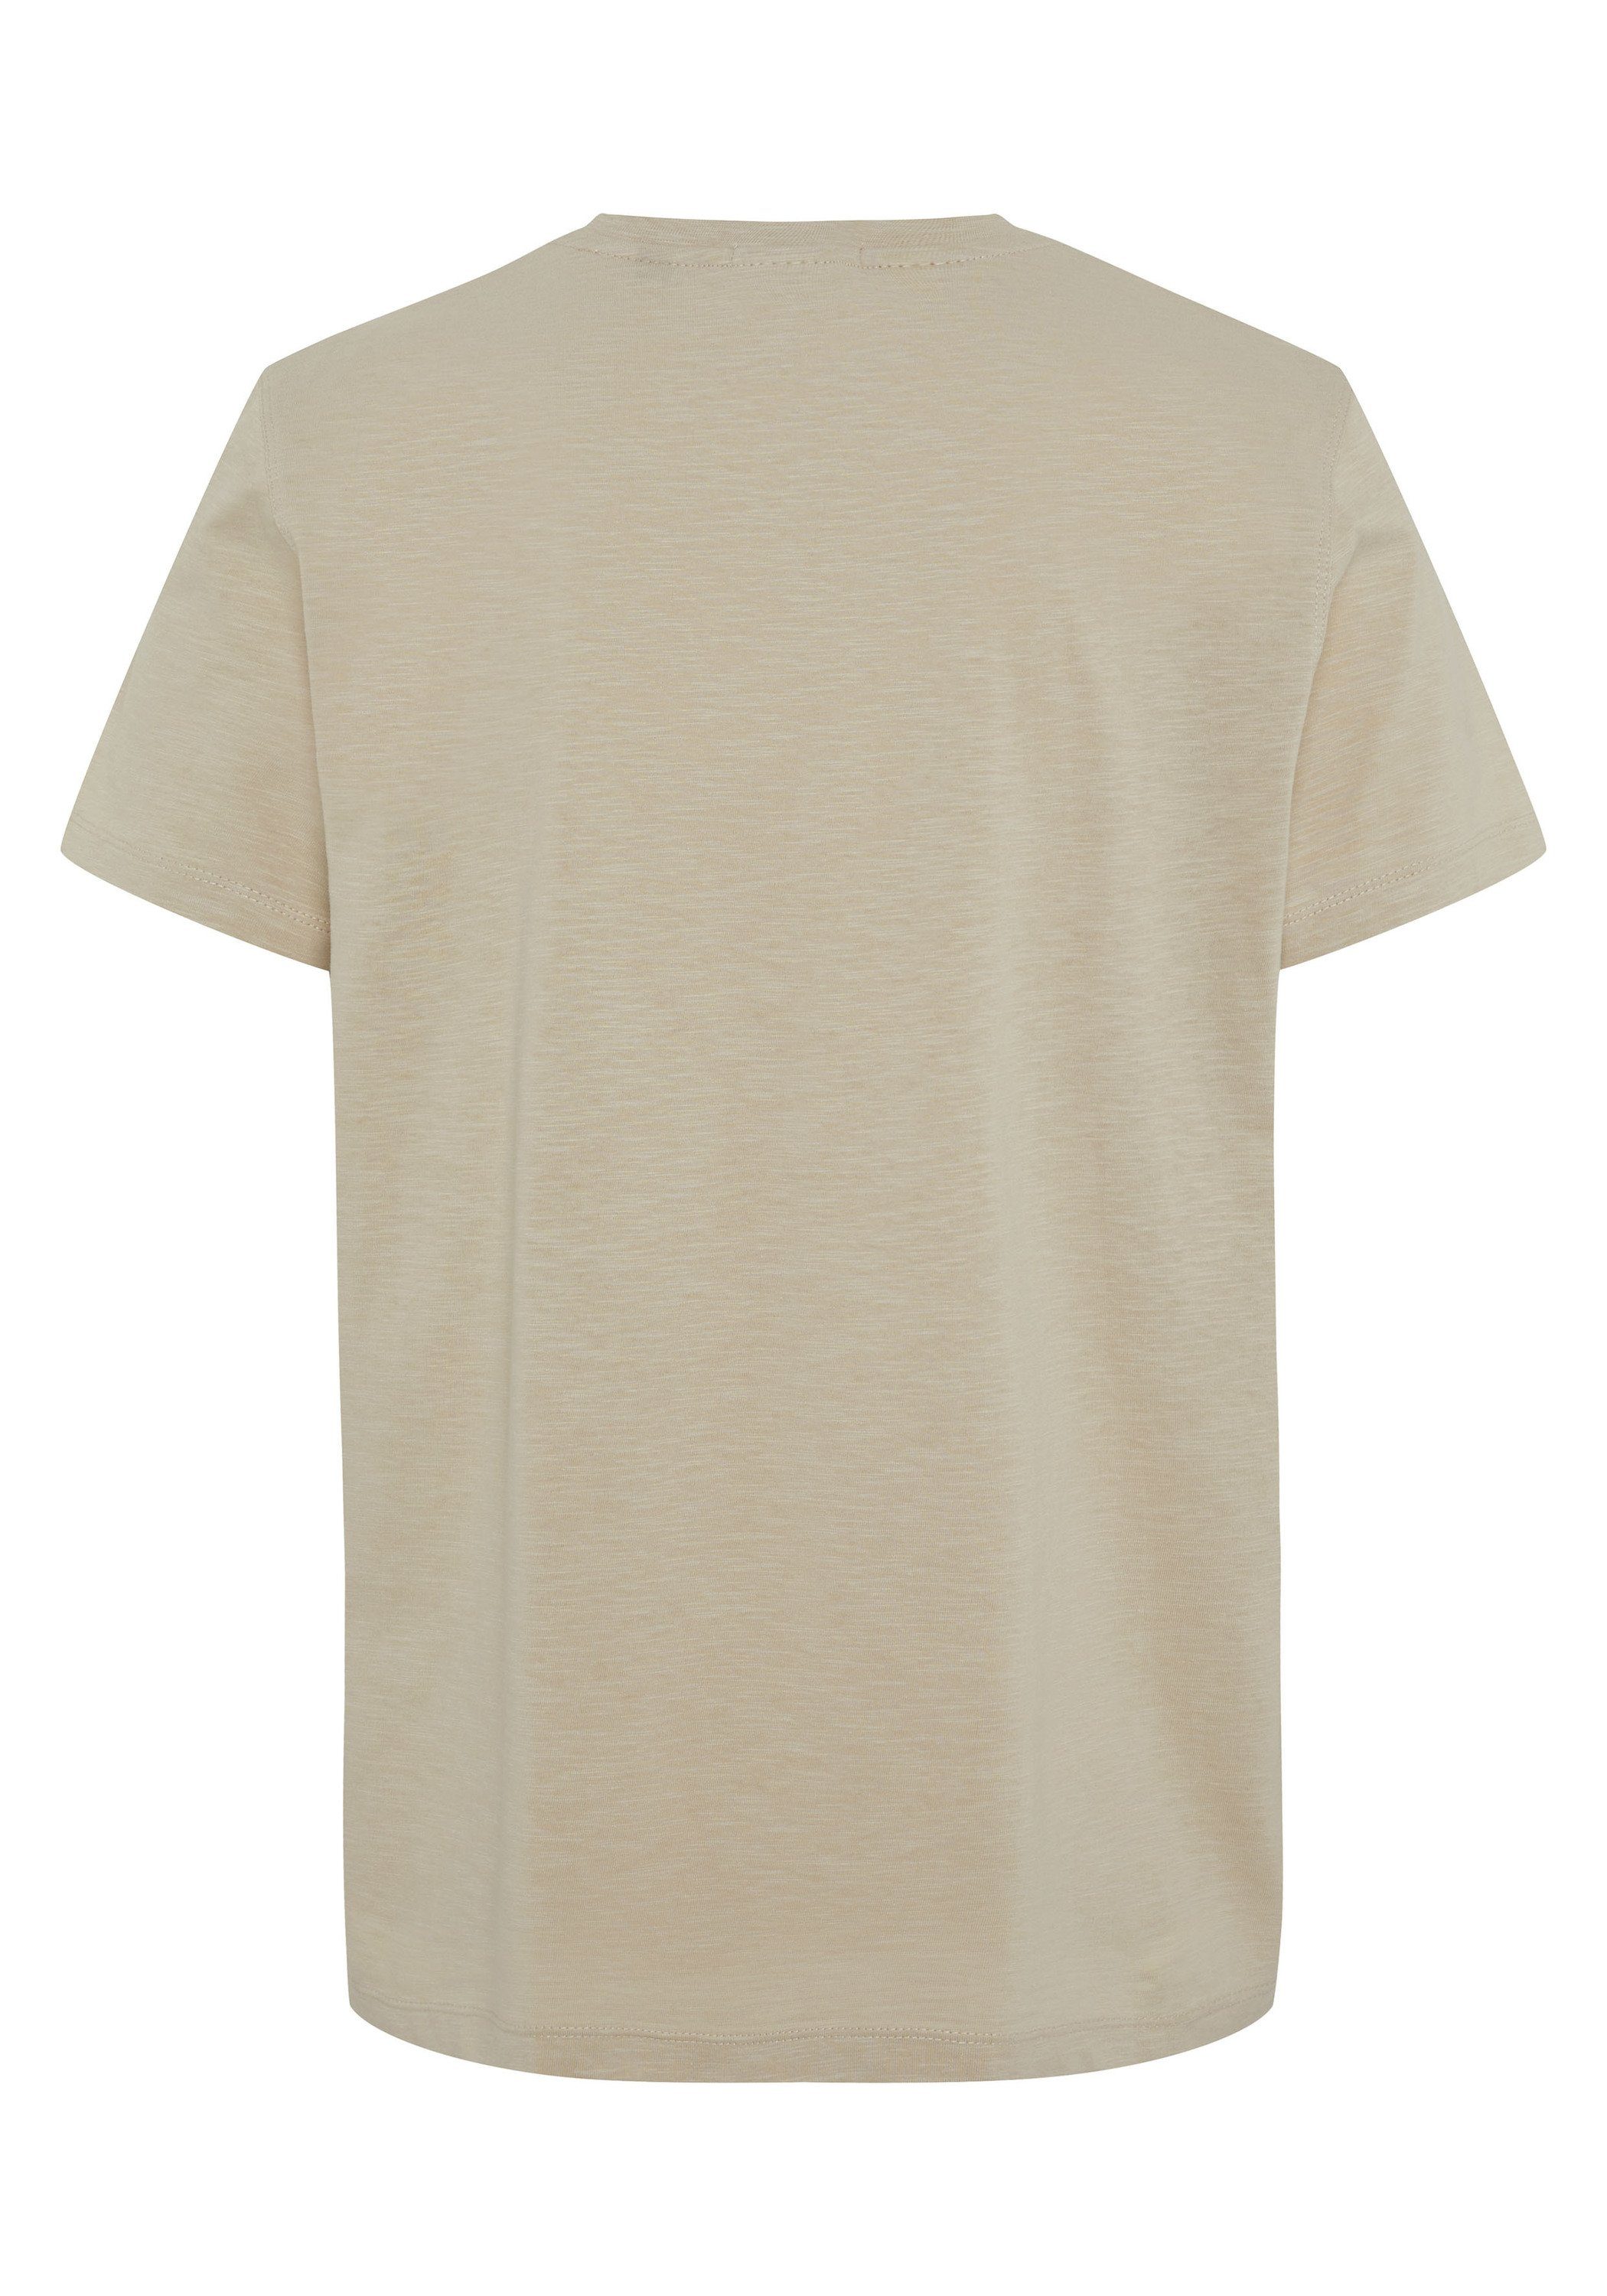 Allover-Textur mit T-Shirt Oxford Tan 15-1306 1 Chiemsee Print-Shirt